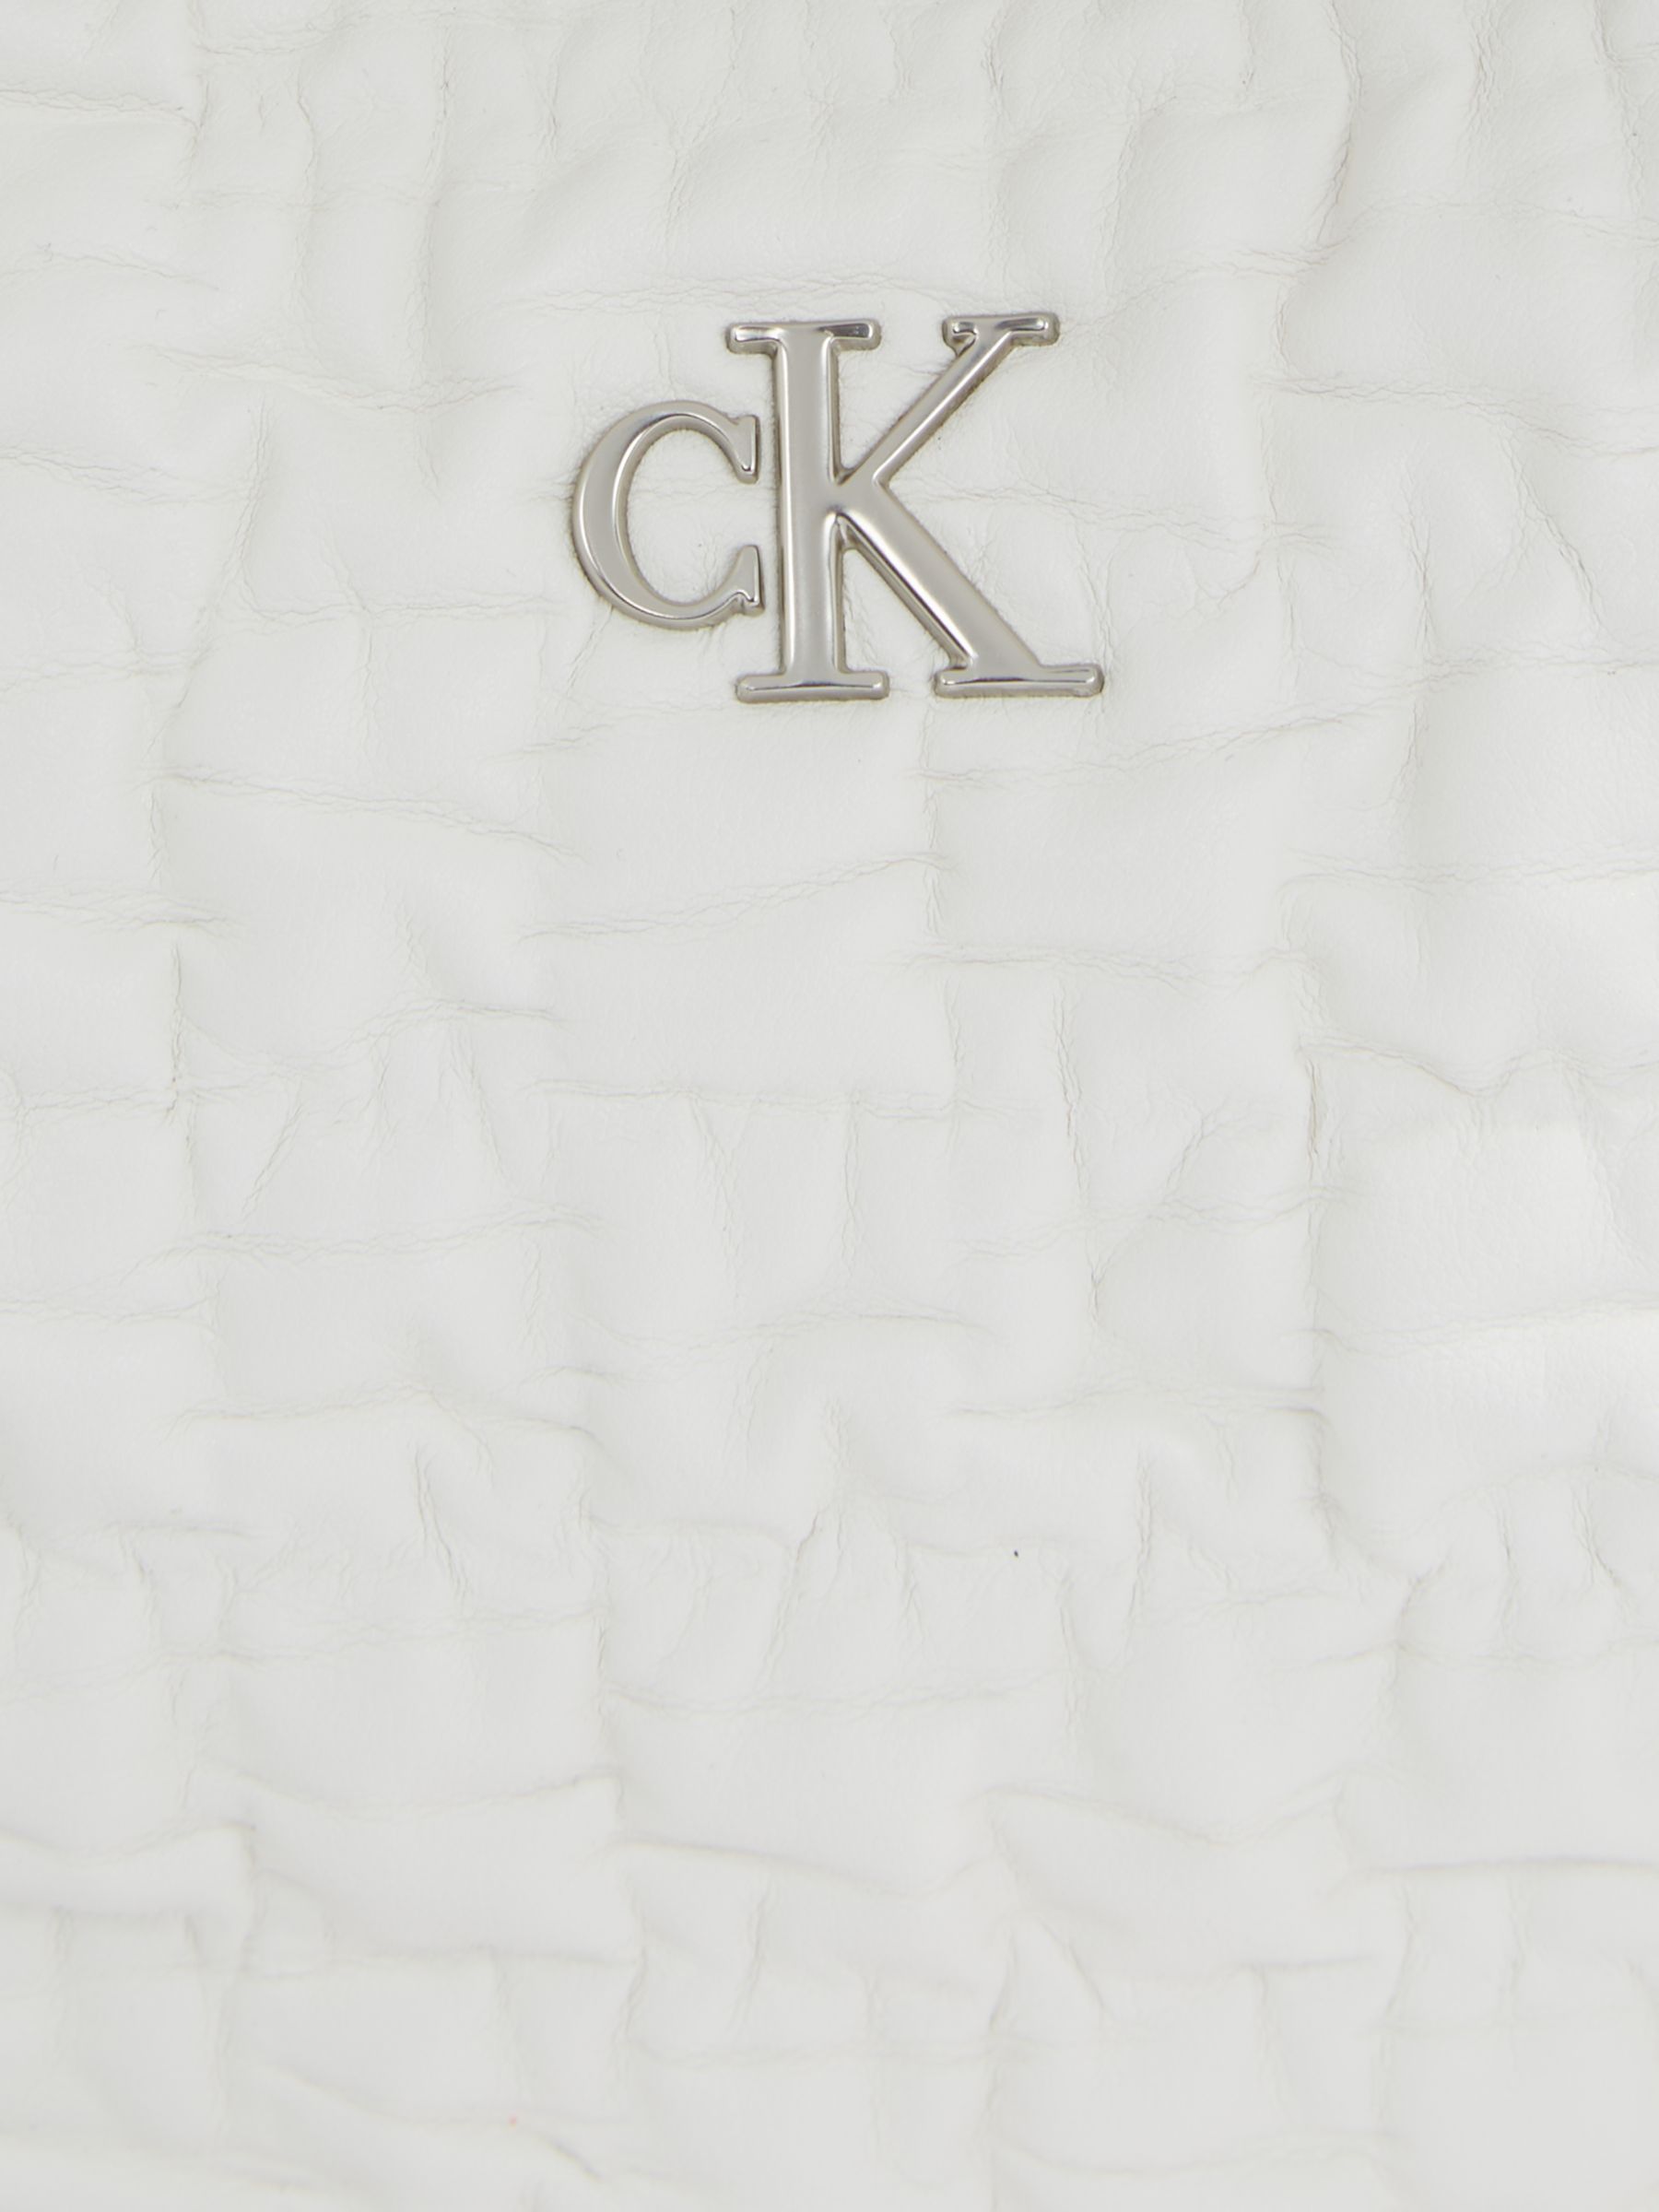 Calvin Klein Crescent Shoulder Bag, Bright White